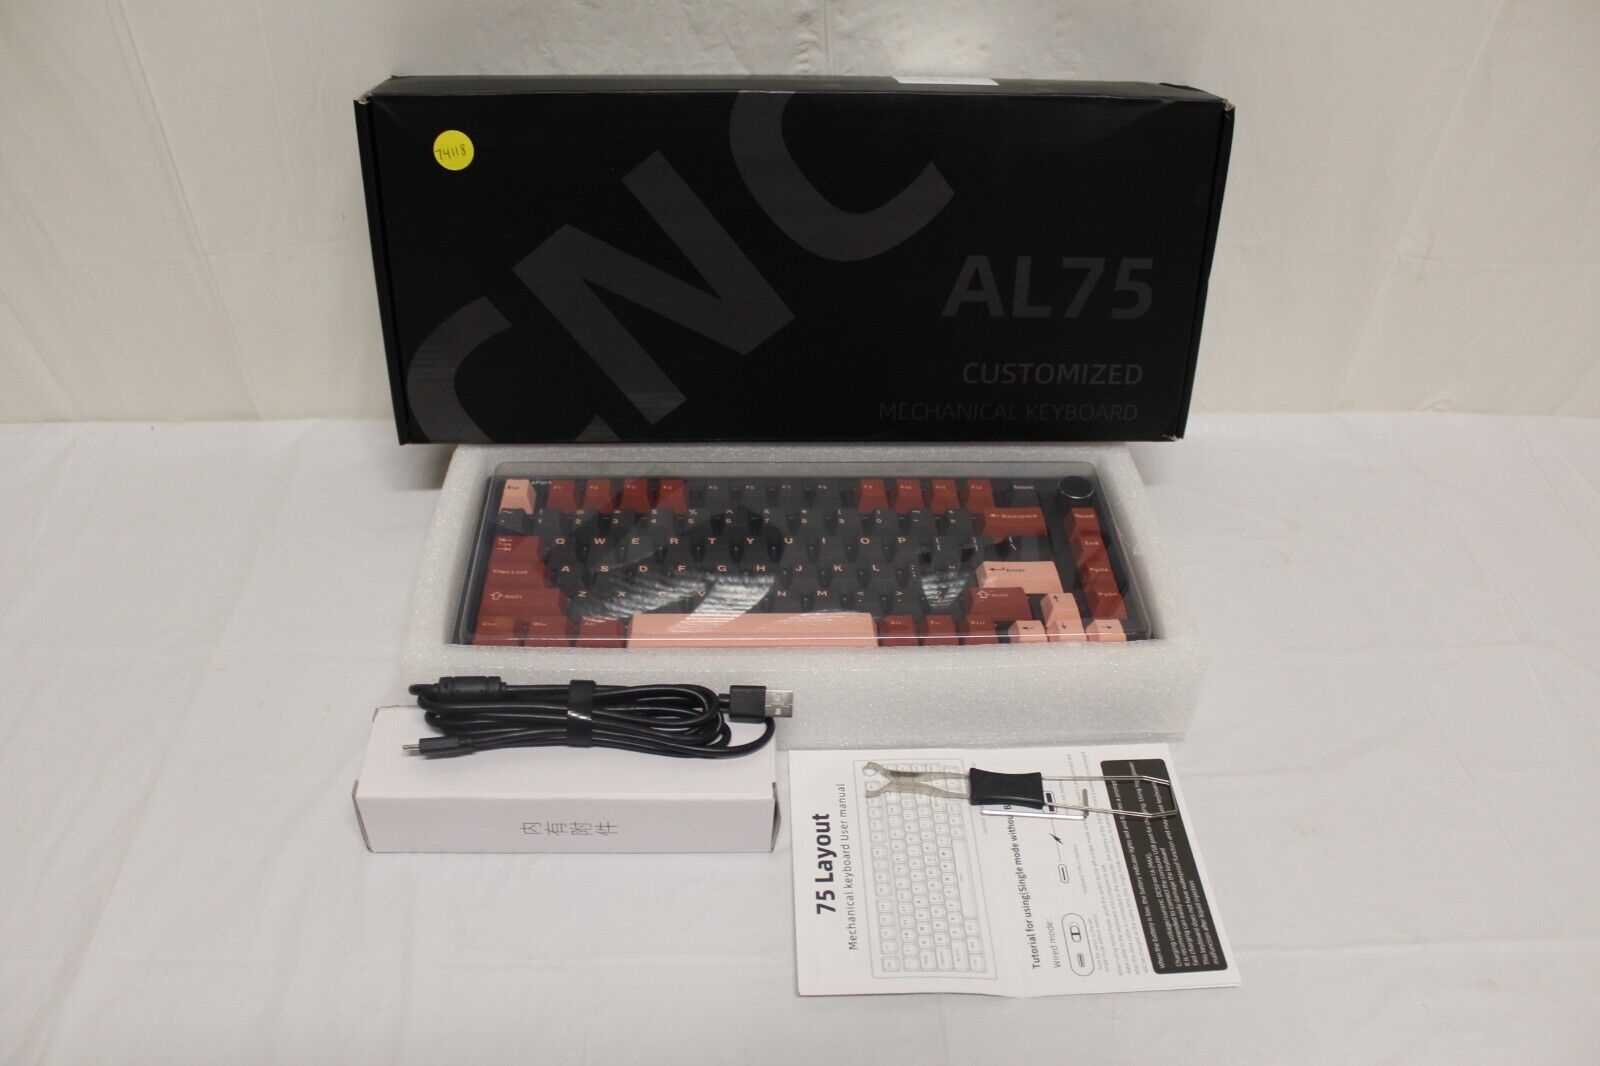 Yunzii AL75 Wireless Mechanical Keyboard CNC Aluminum Case Cocoa D2